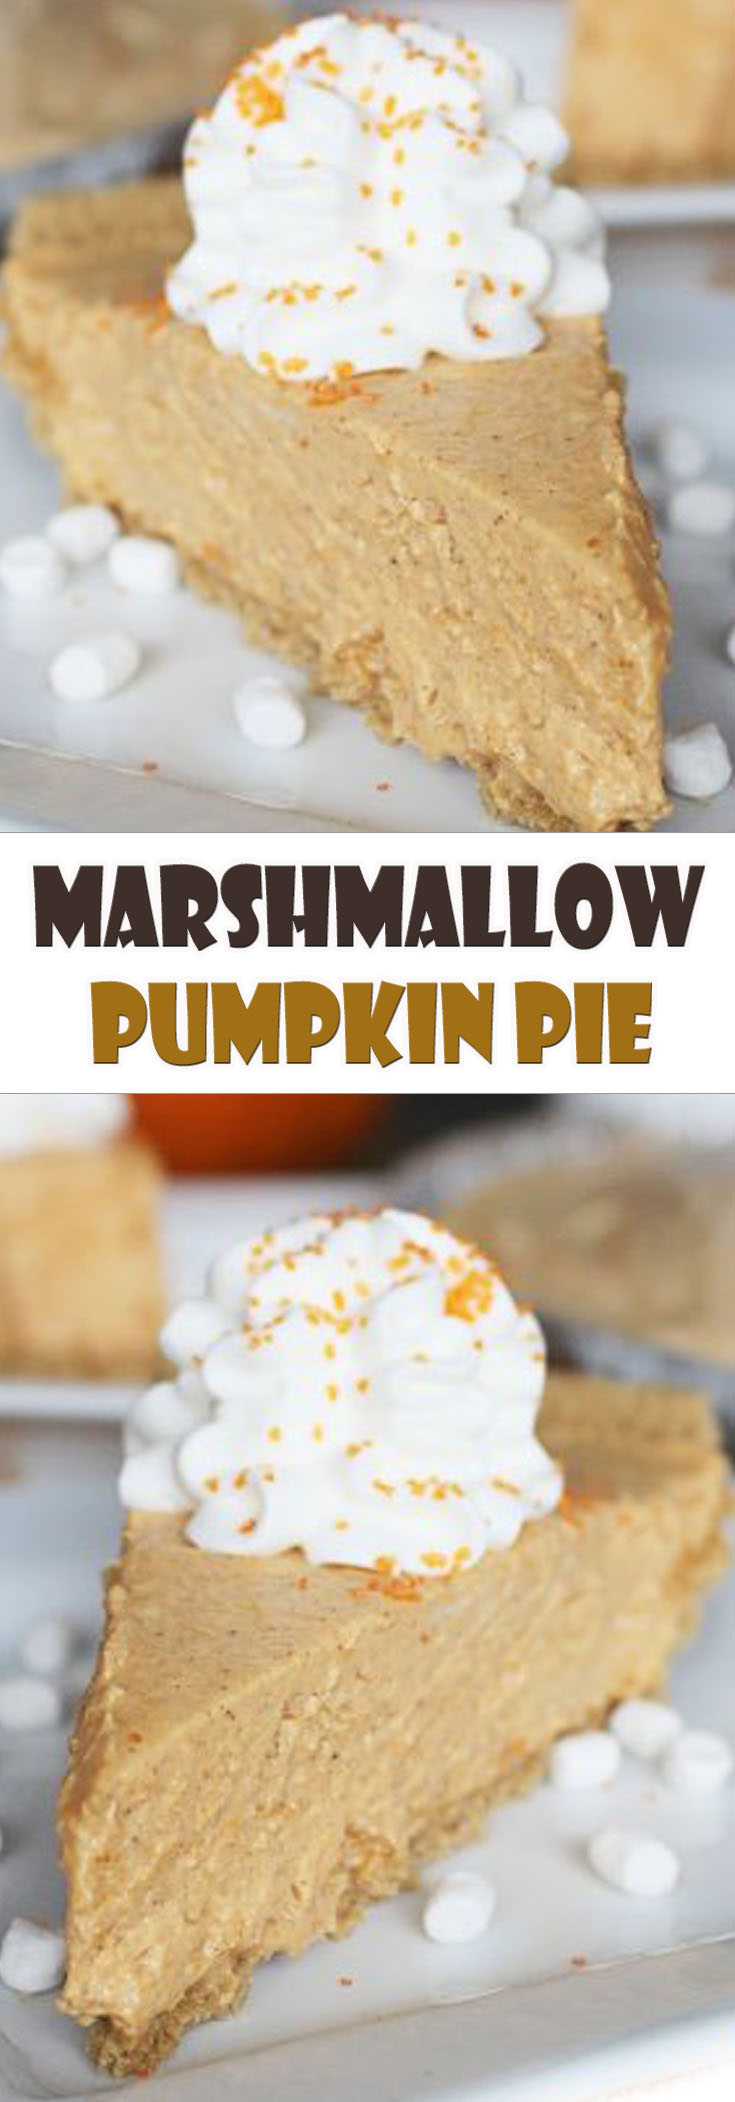 Marshmallow Pumpkin Pie